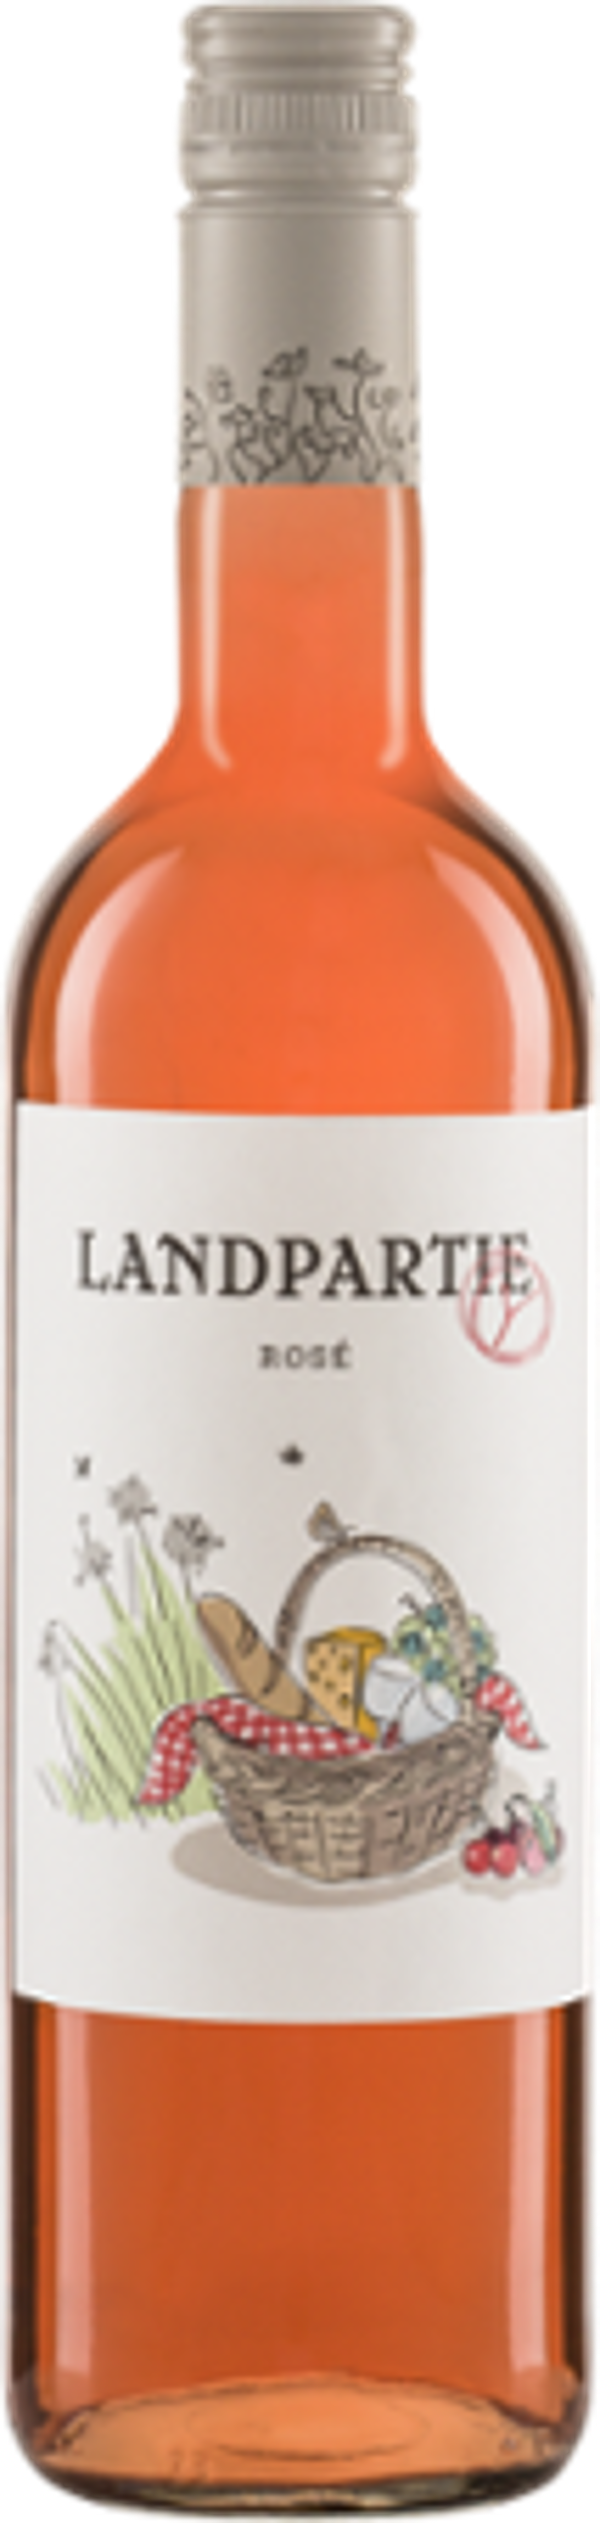 Produktfoto zu Kiste Landpartie Rosé 6*0,75l